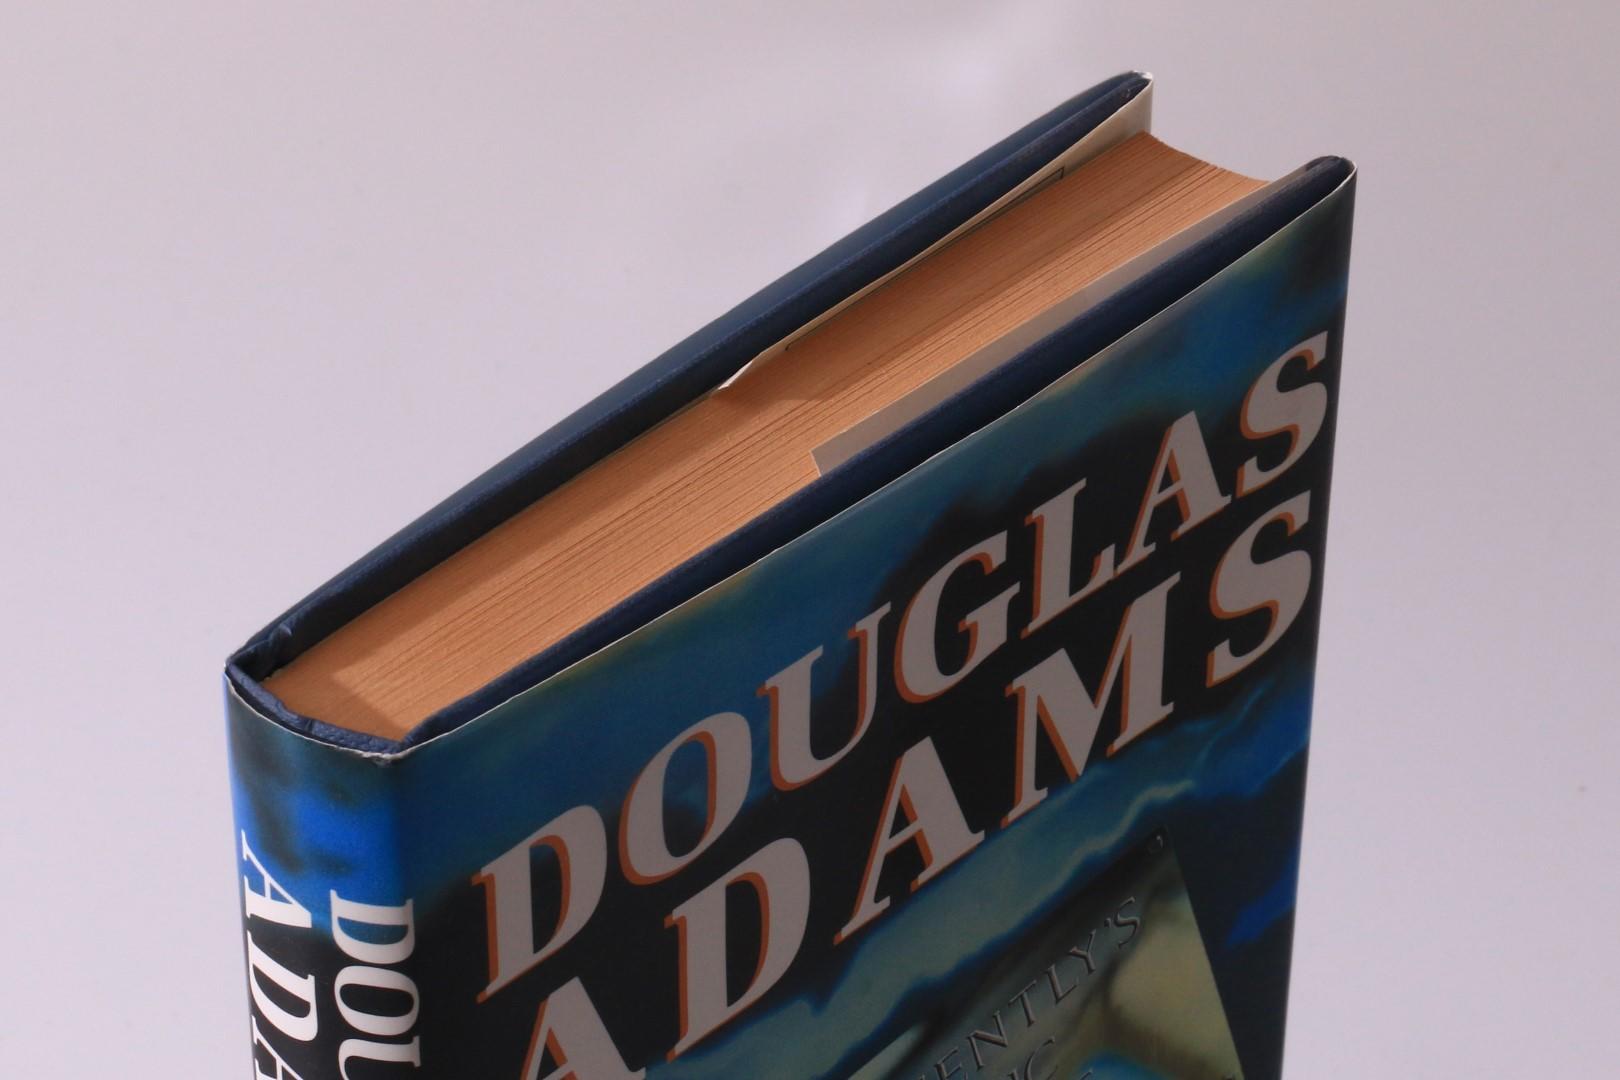 Douglas Adams - Dirk Gently's Holistic Detective Agency - Heinemann, 1987, Signed First Edition.